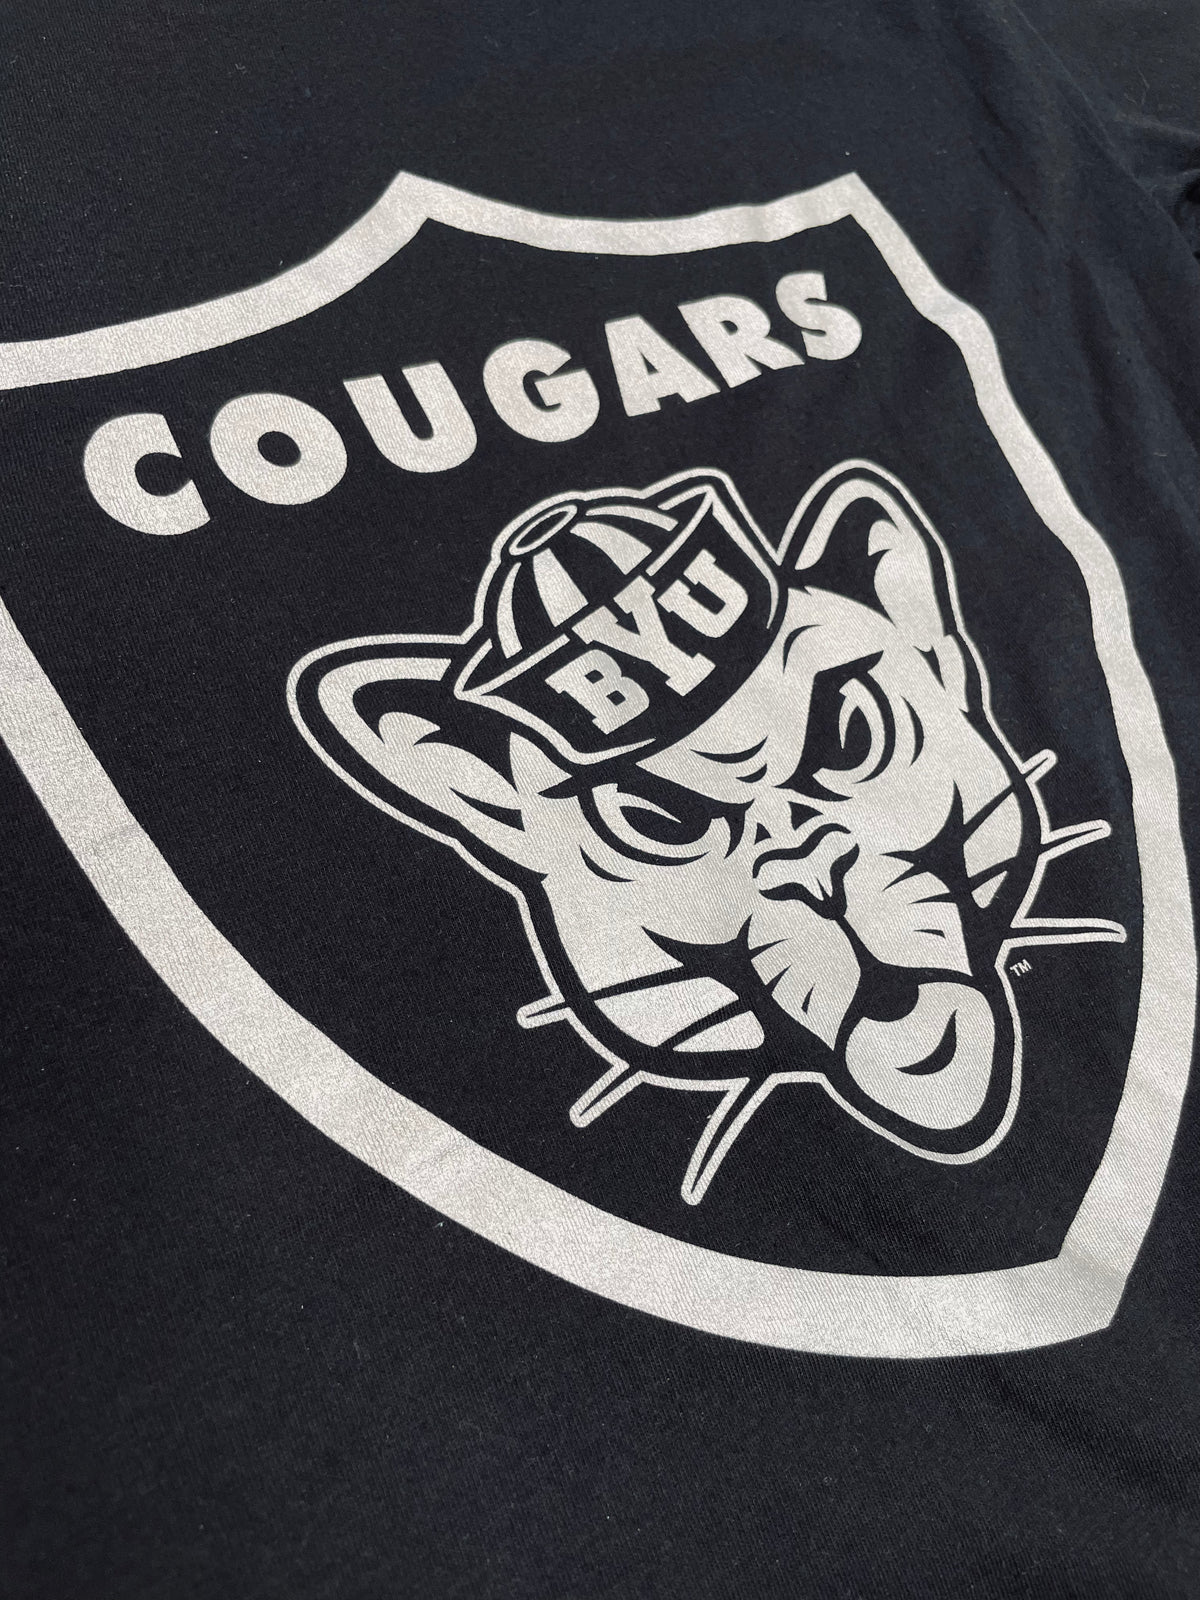 Sailor Cougar Crest BYU T-Shirt